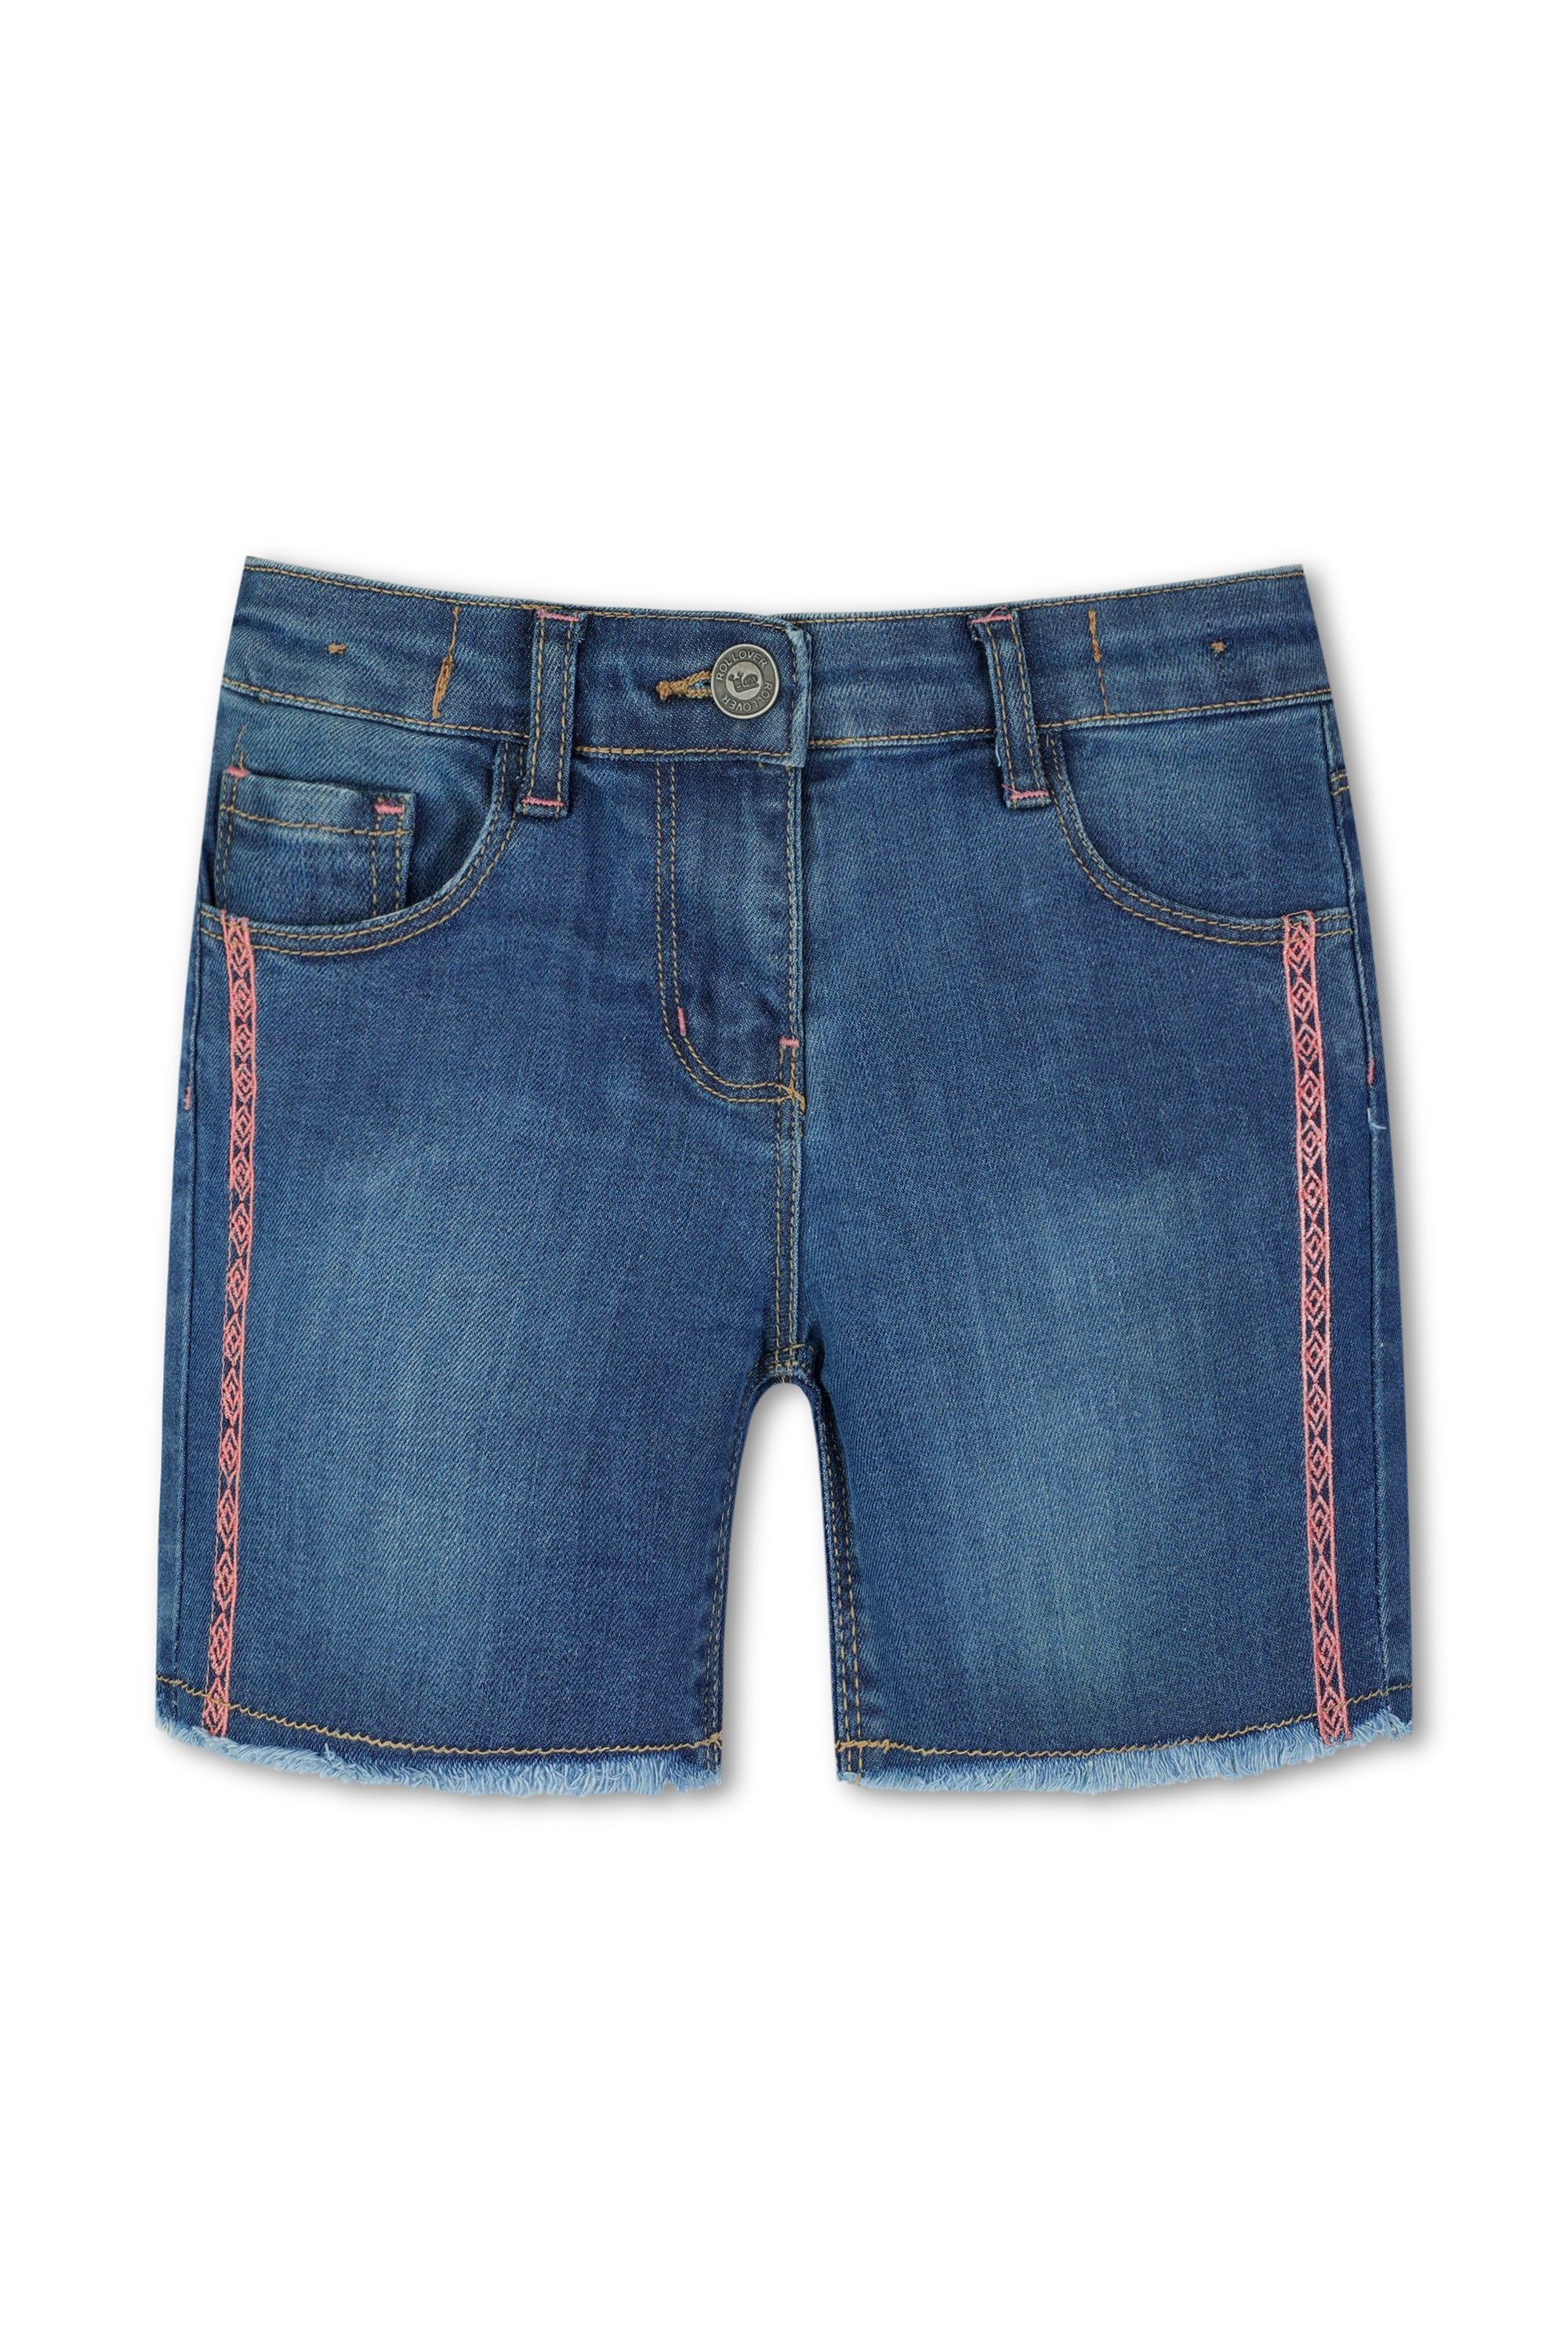 Medium Blue Denim Shorts - Girls